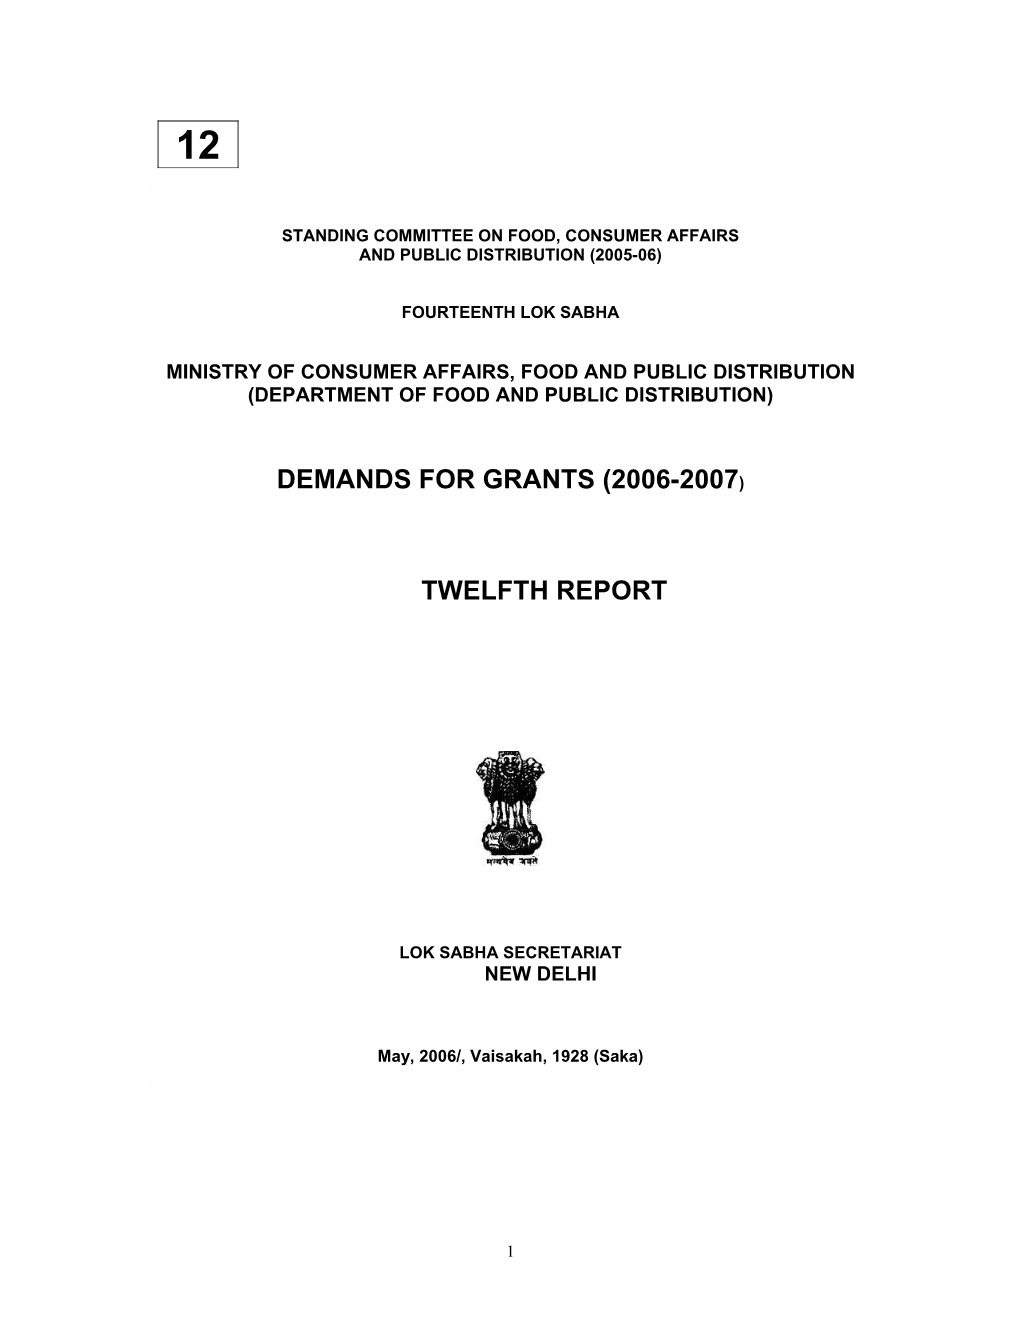 Demands for Grants (2006-2007) Twelfth Report